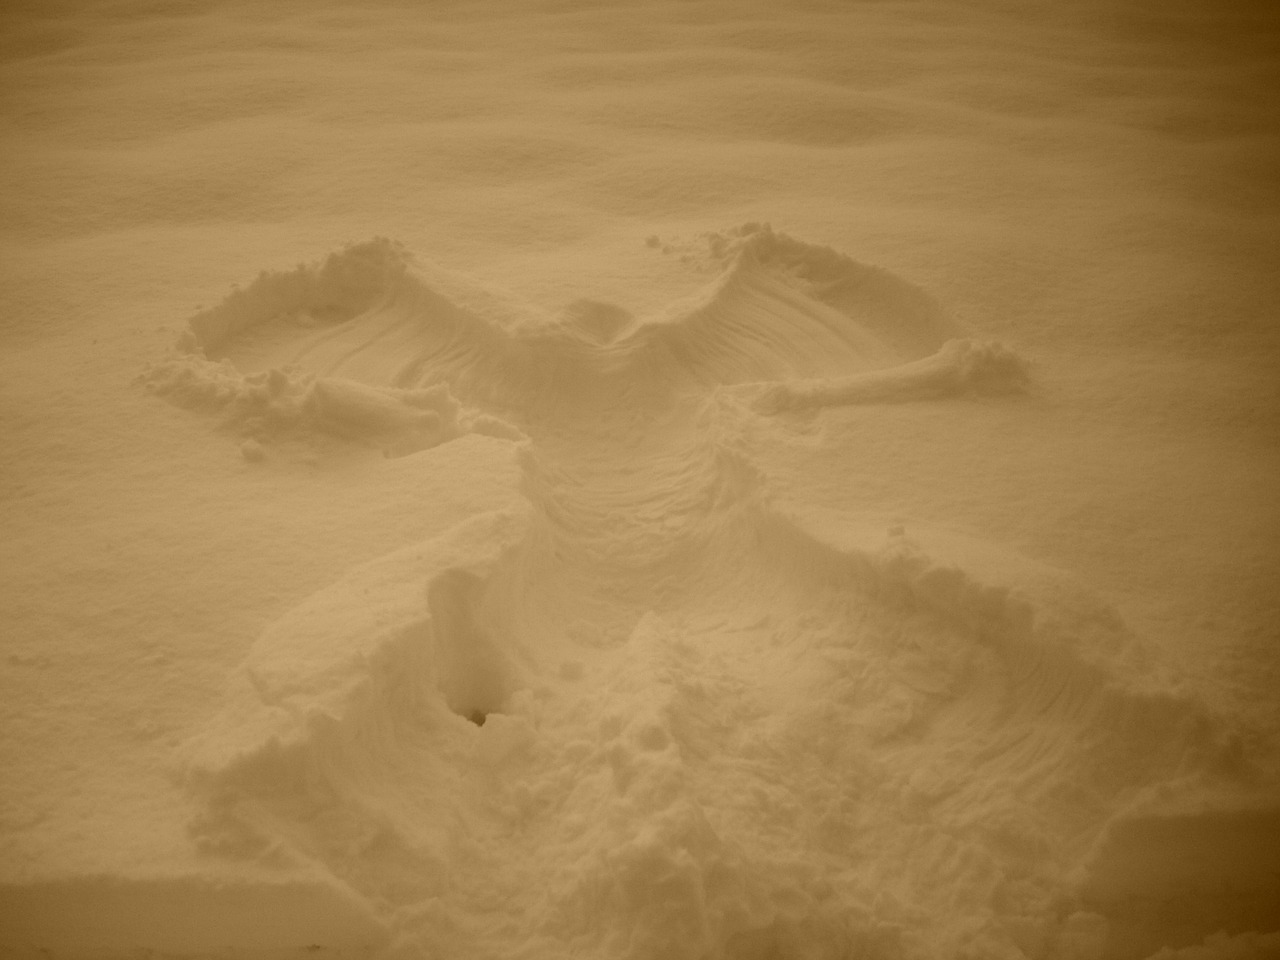 snow angel snow figure free photo